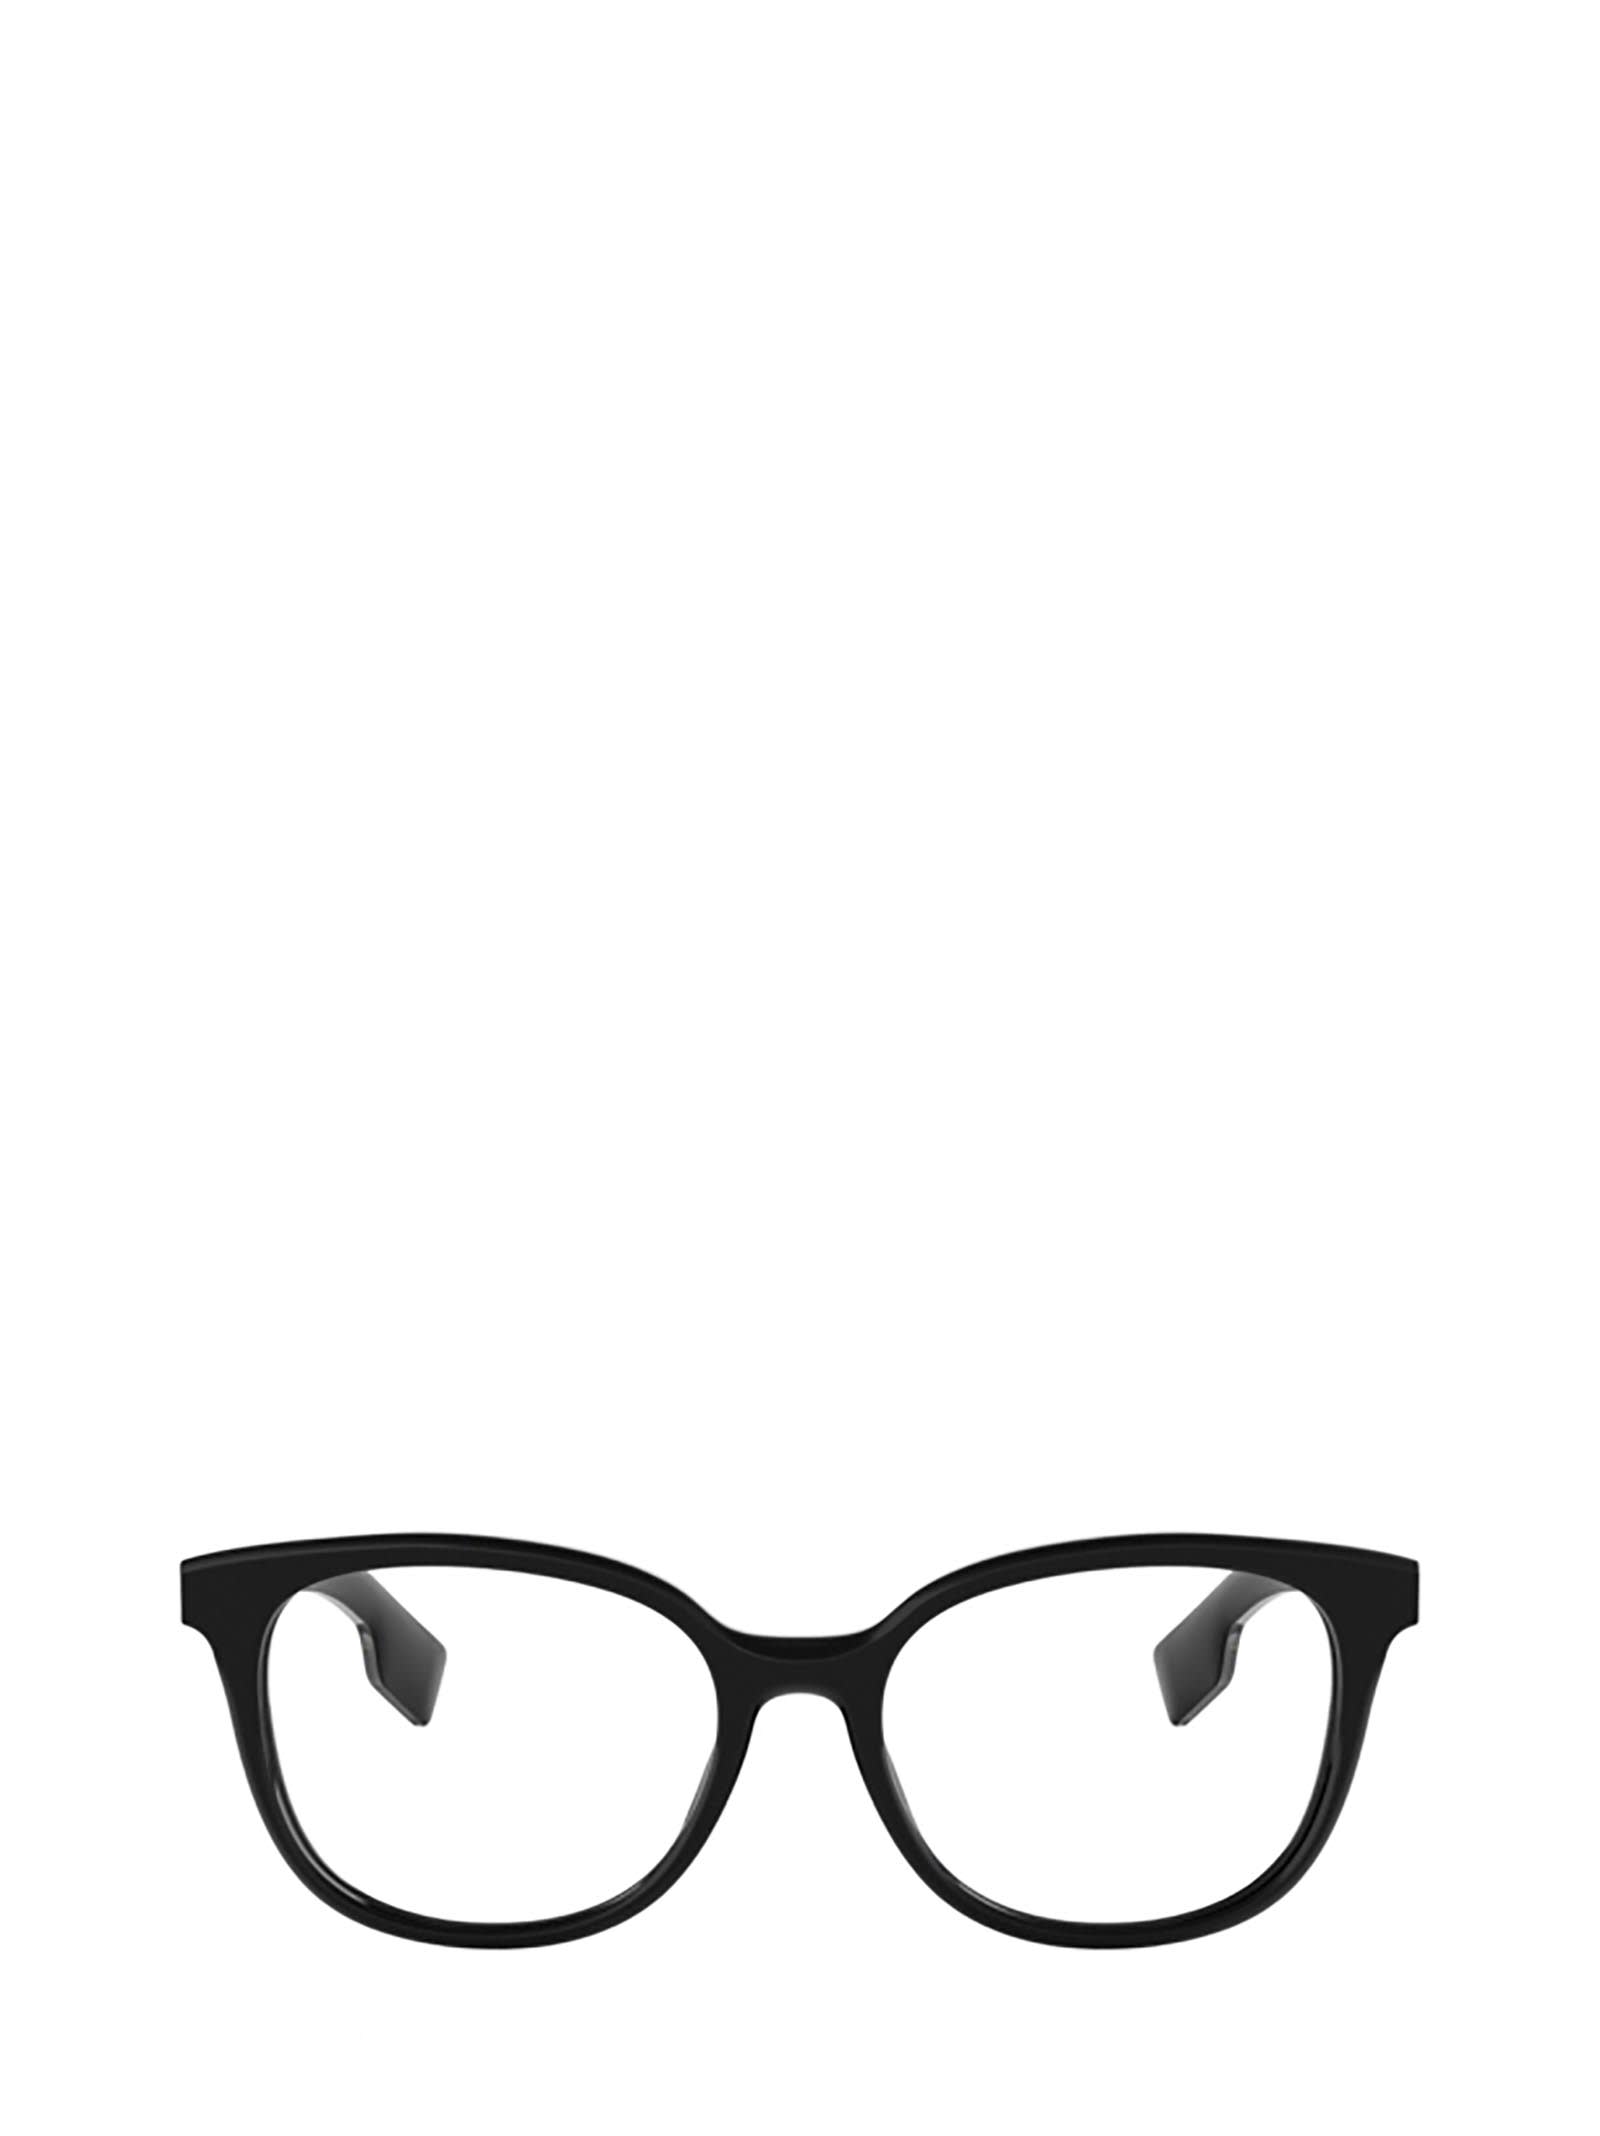 Burberry Be2291 Black Glasses